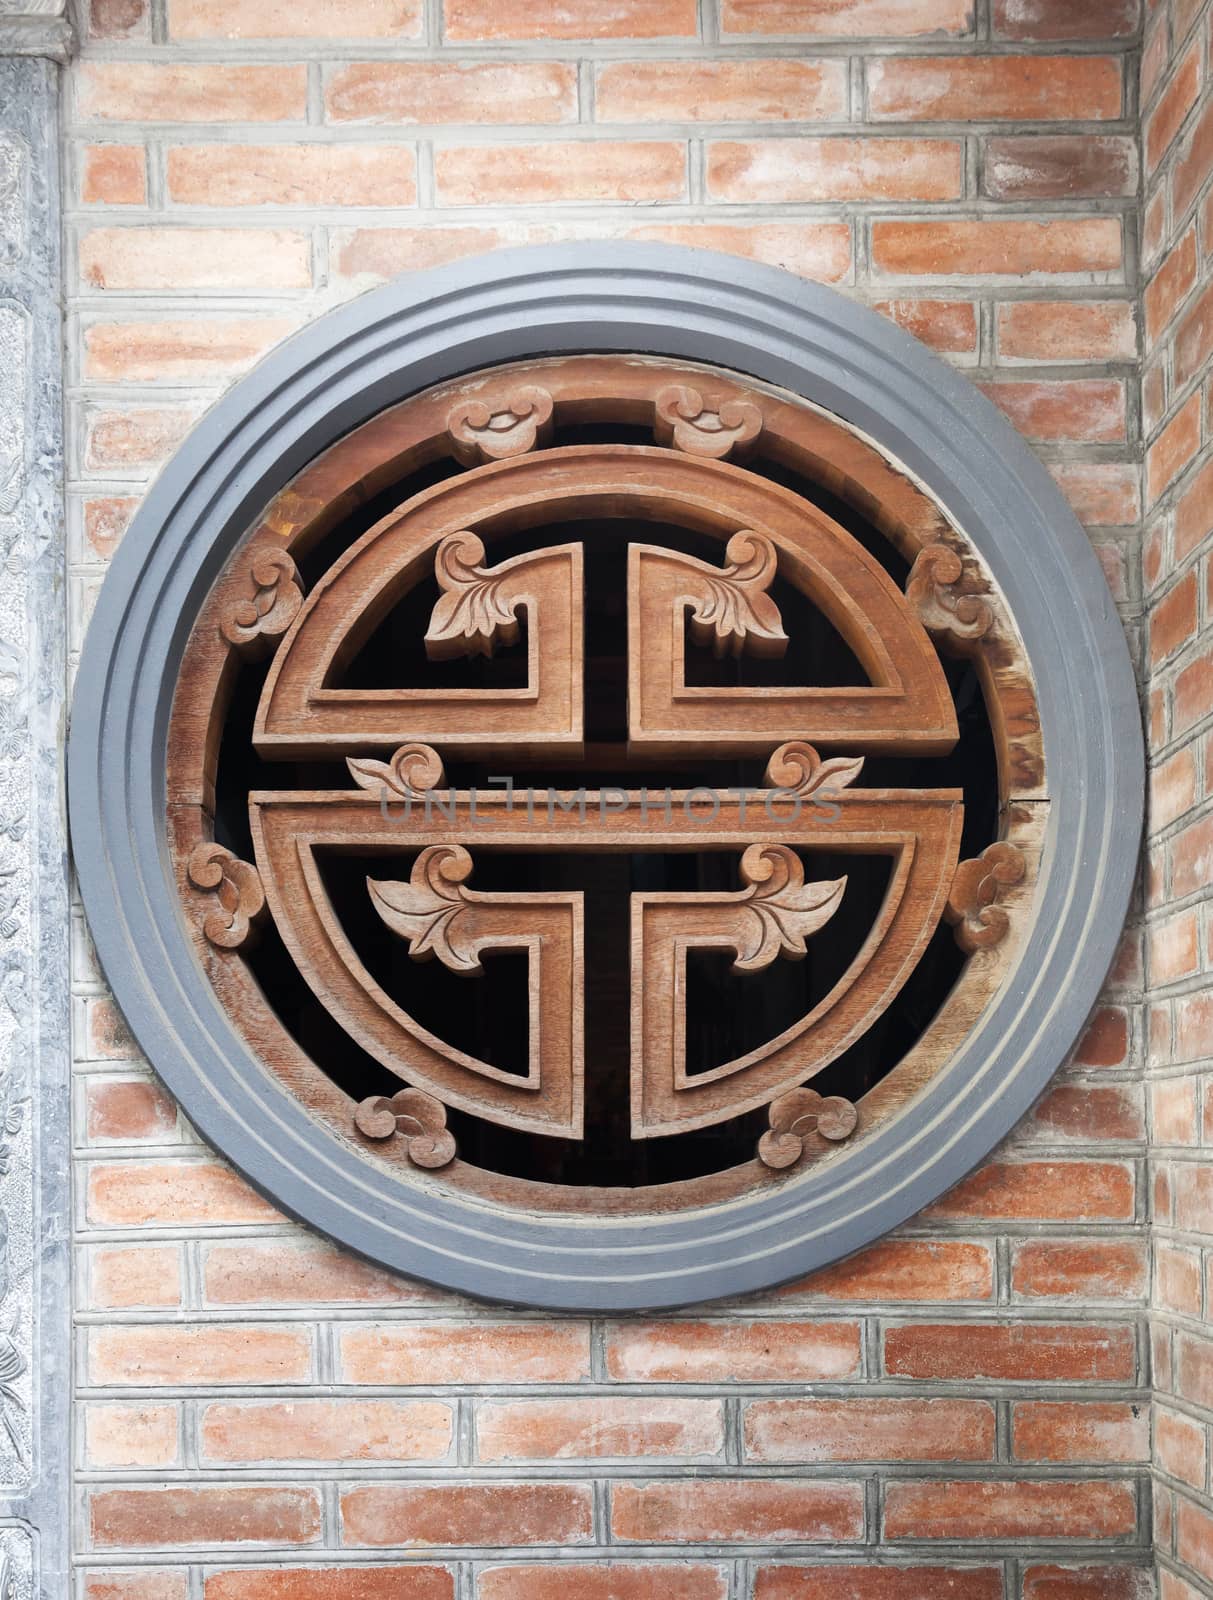 Chinese longevity symbol made of ceramic by Goodday